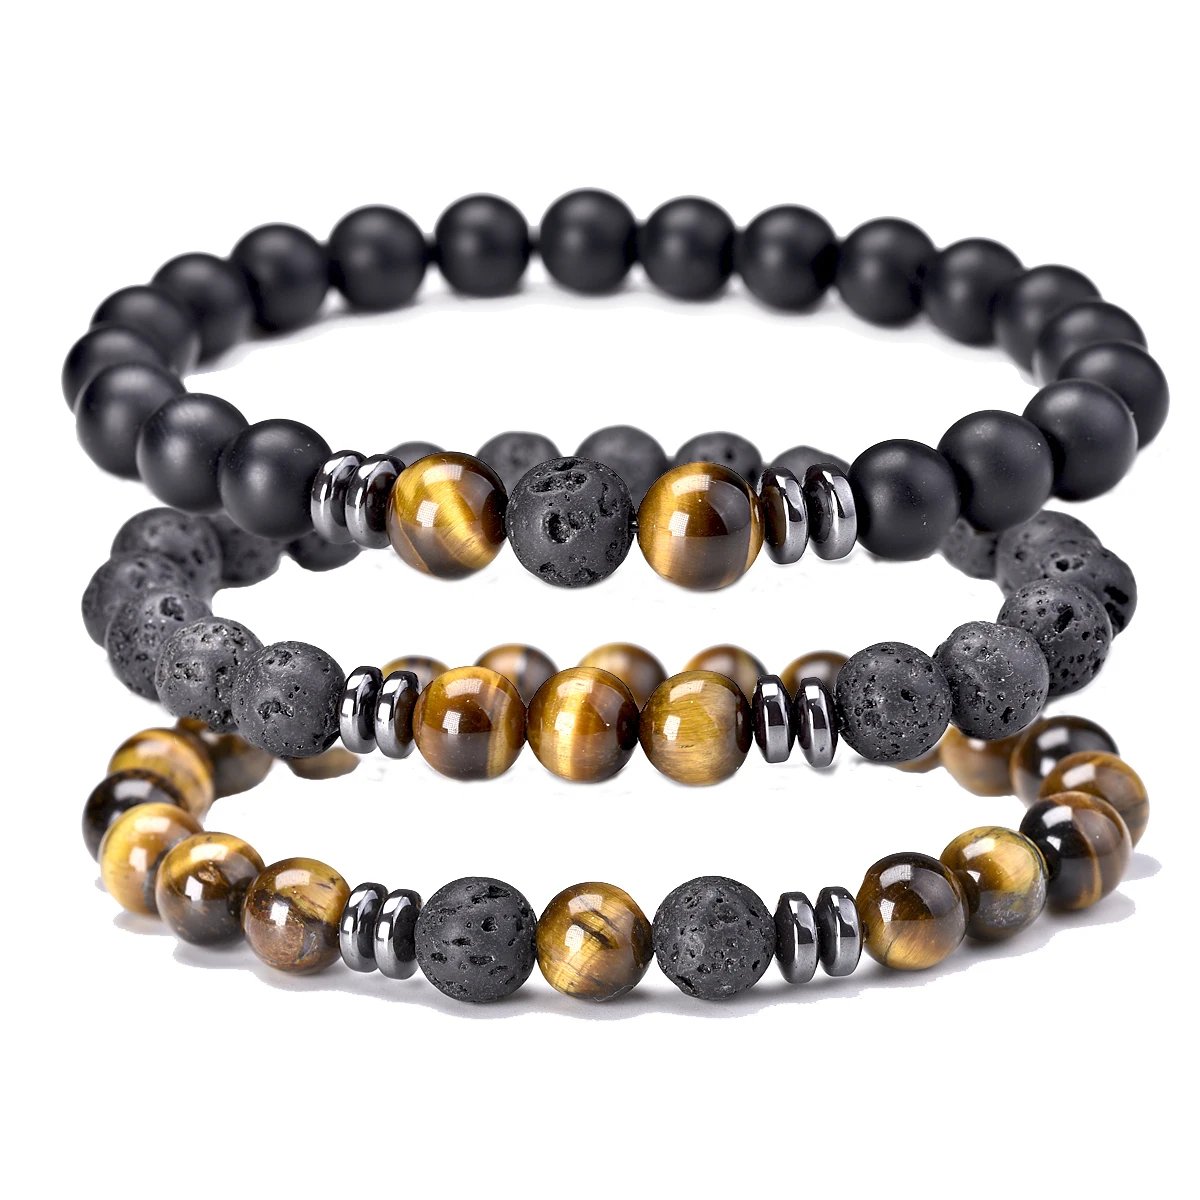 

8mm 3 pcs/Set Natural Stone Beads Bracelet For Men Tiger Eys Black Lava Howlite Jewelry Agates Elastic Bangle Bracelets